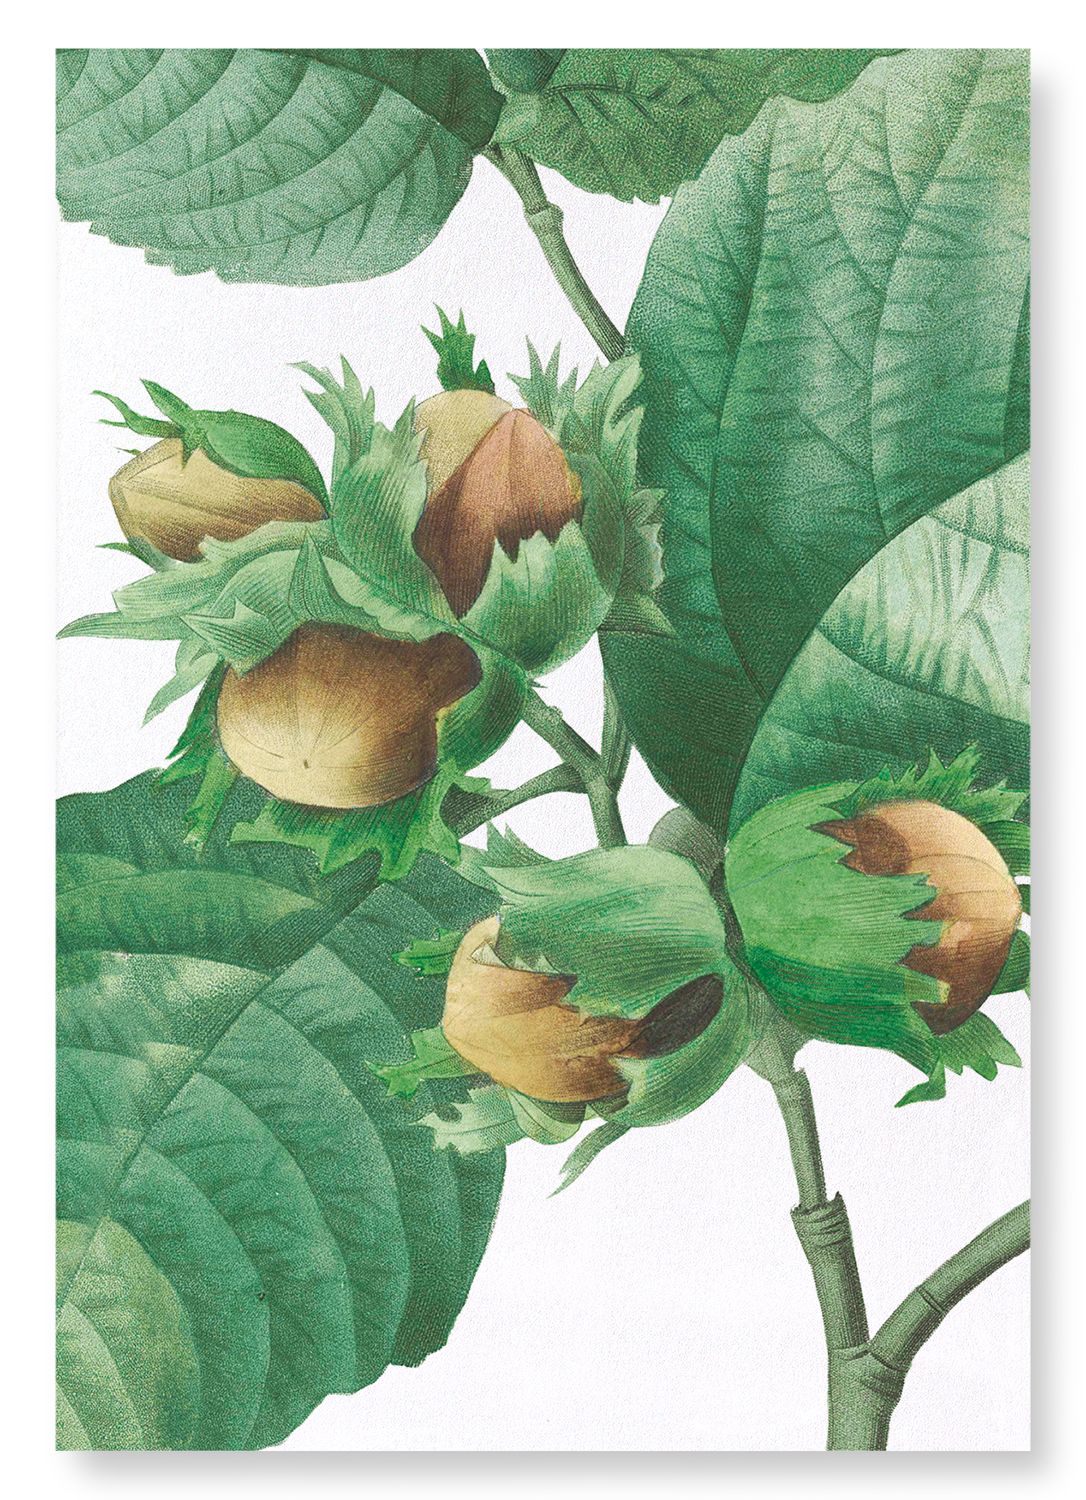 FILBERT HAZLENUT: Botanical Art Print